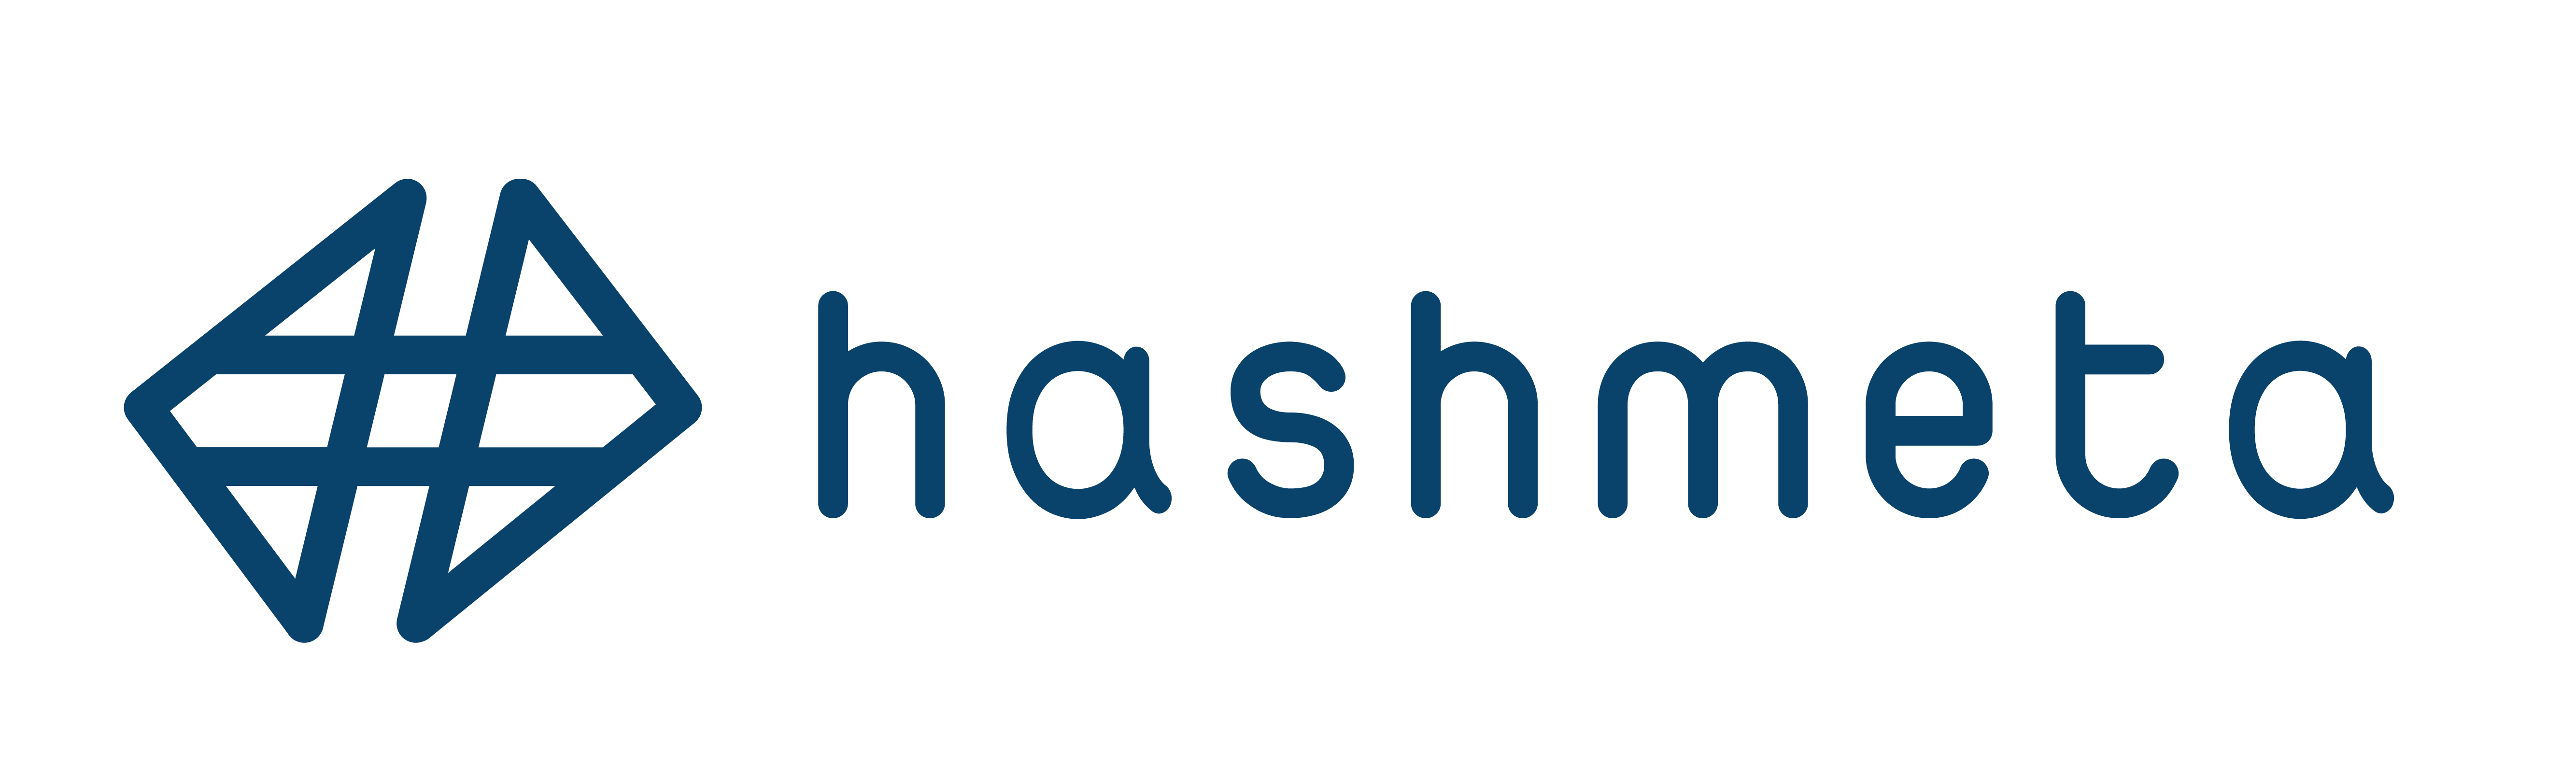 Hashmeta | Digital Marketing Agency Agency Services & Qualifications | HubSpot